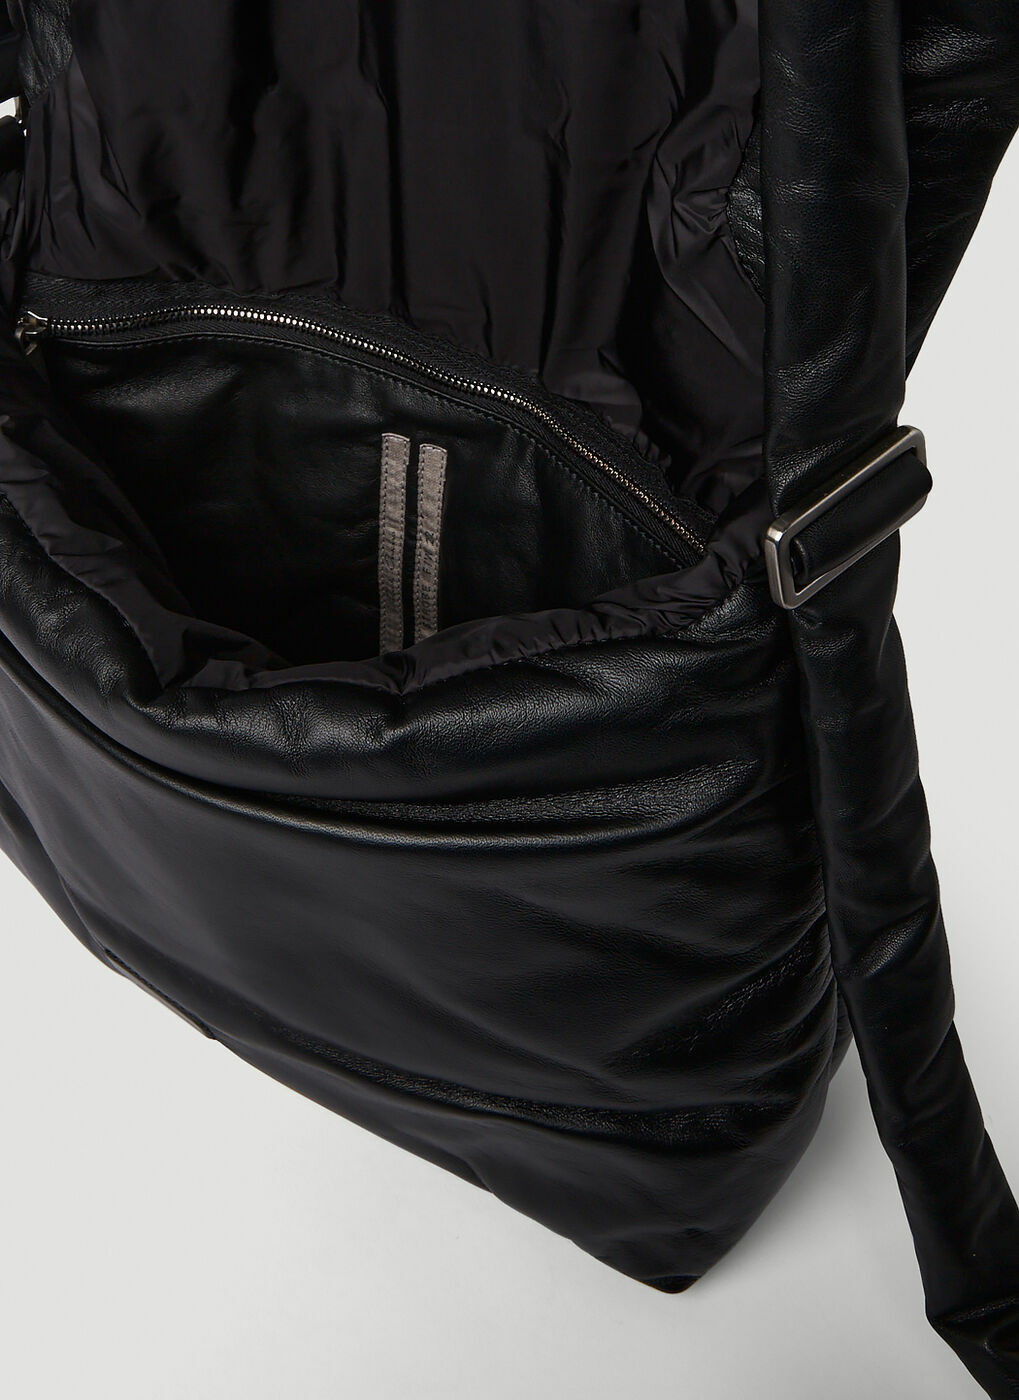 Pillow Crossbody Bag in Black